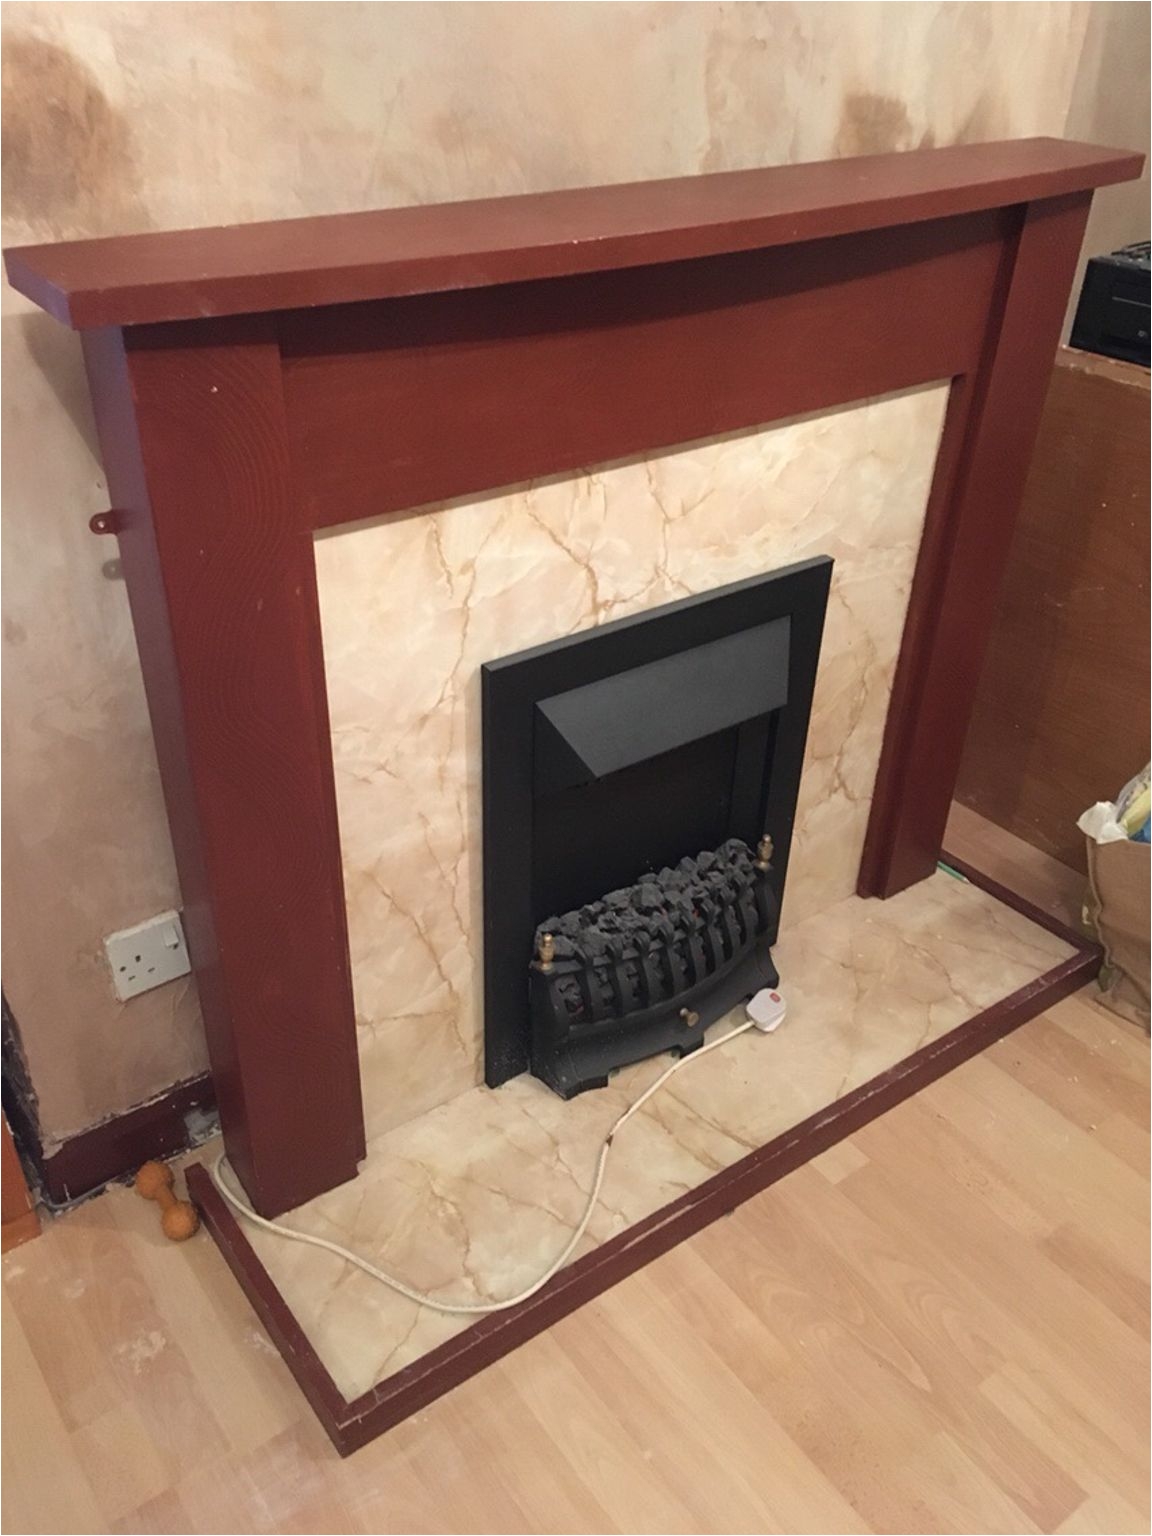 2017 Entu 3d Fireplace Steam Fireplace Water Vapor Fireplace Decorating Electric Fireplace Https En Shpock Com I Wjel 00ixuxyi0v3 2017 04 08t13 48 21 02